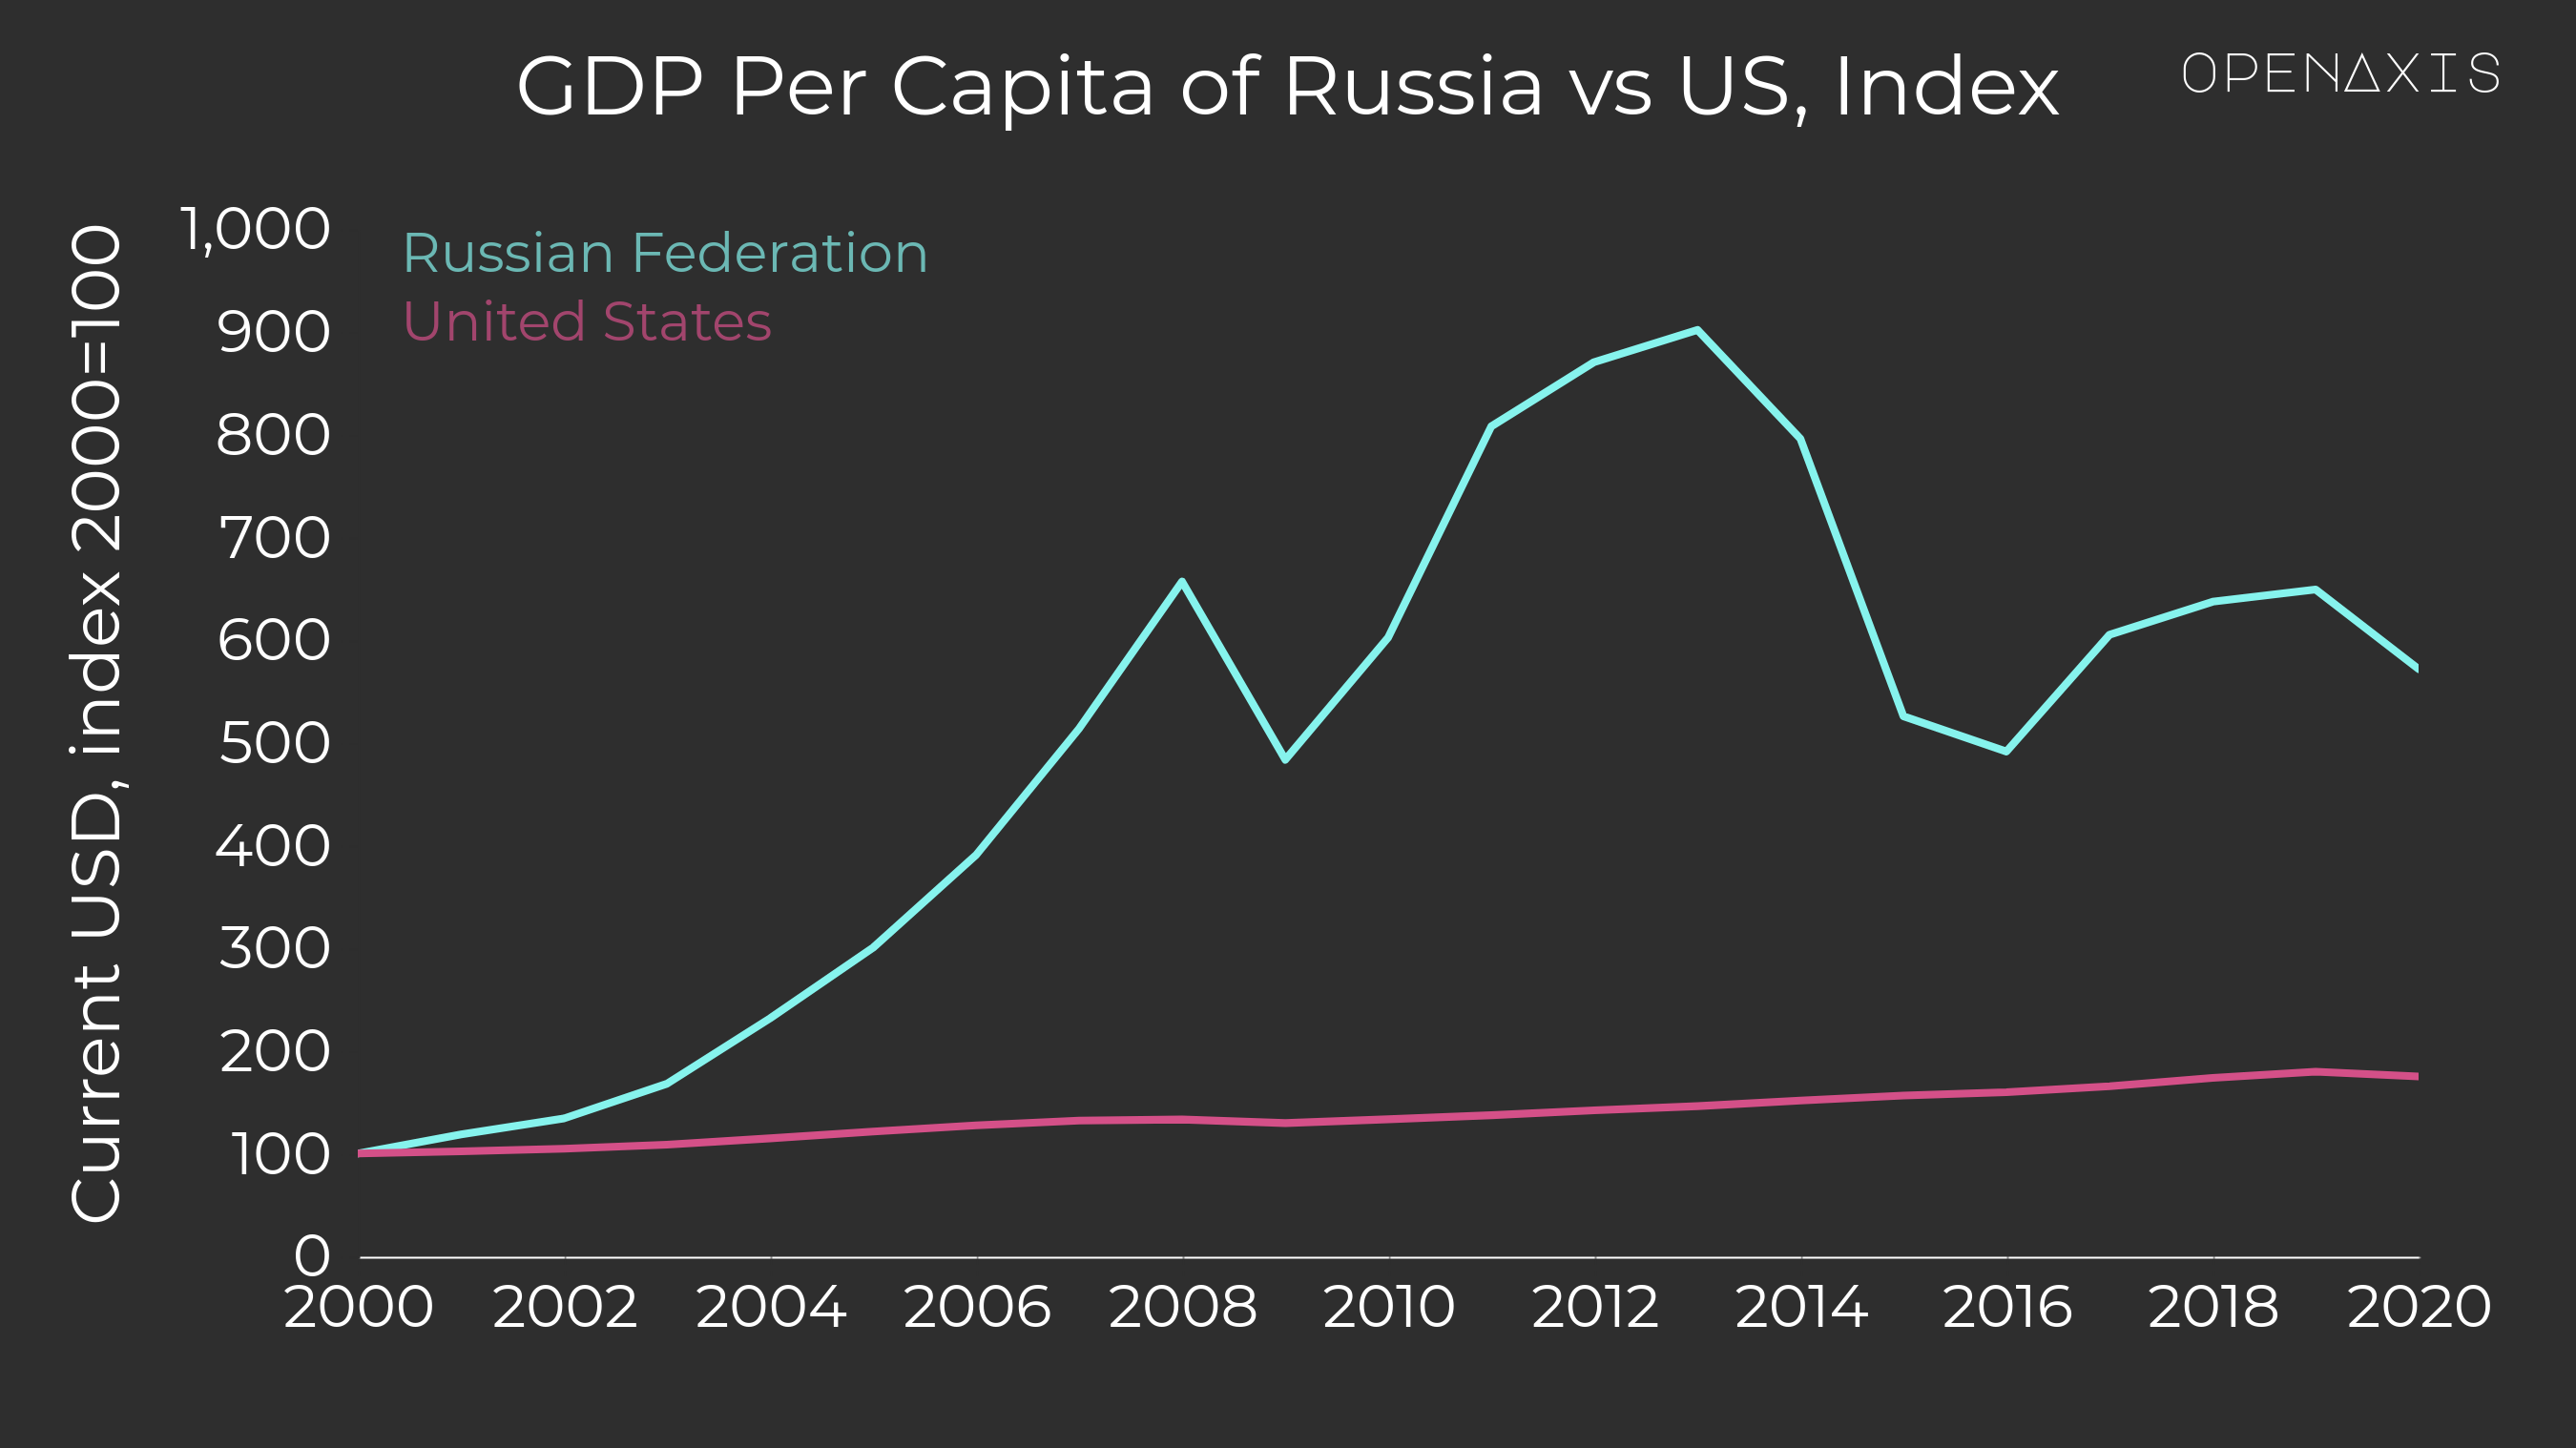 "GDP Per Capita of Russia vs US, Index"